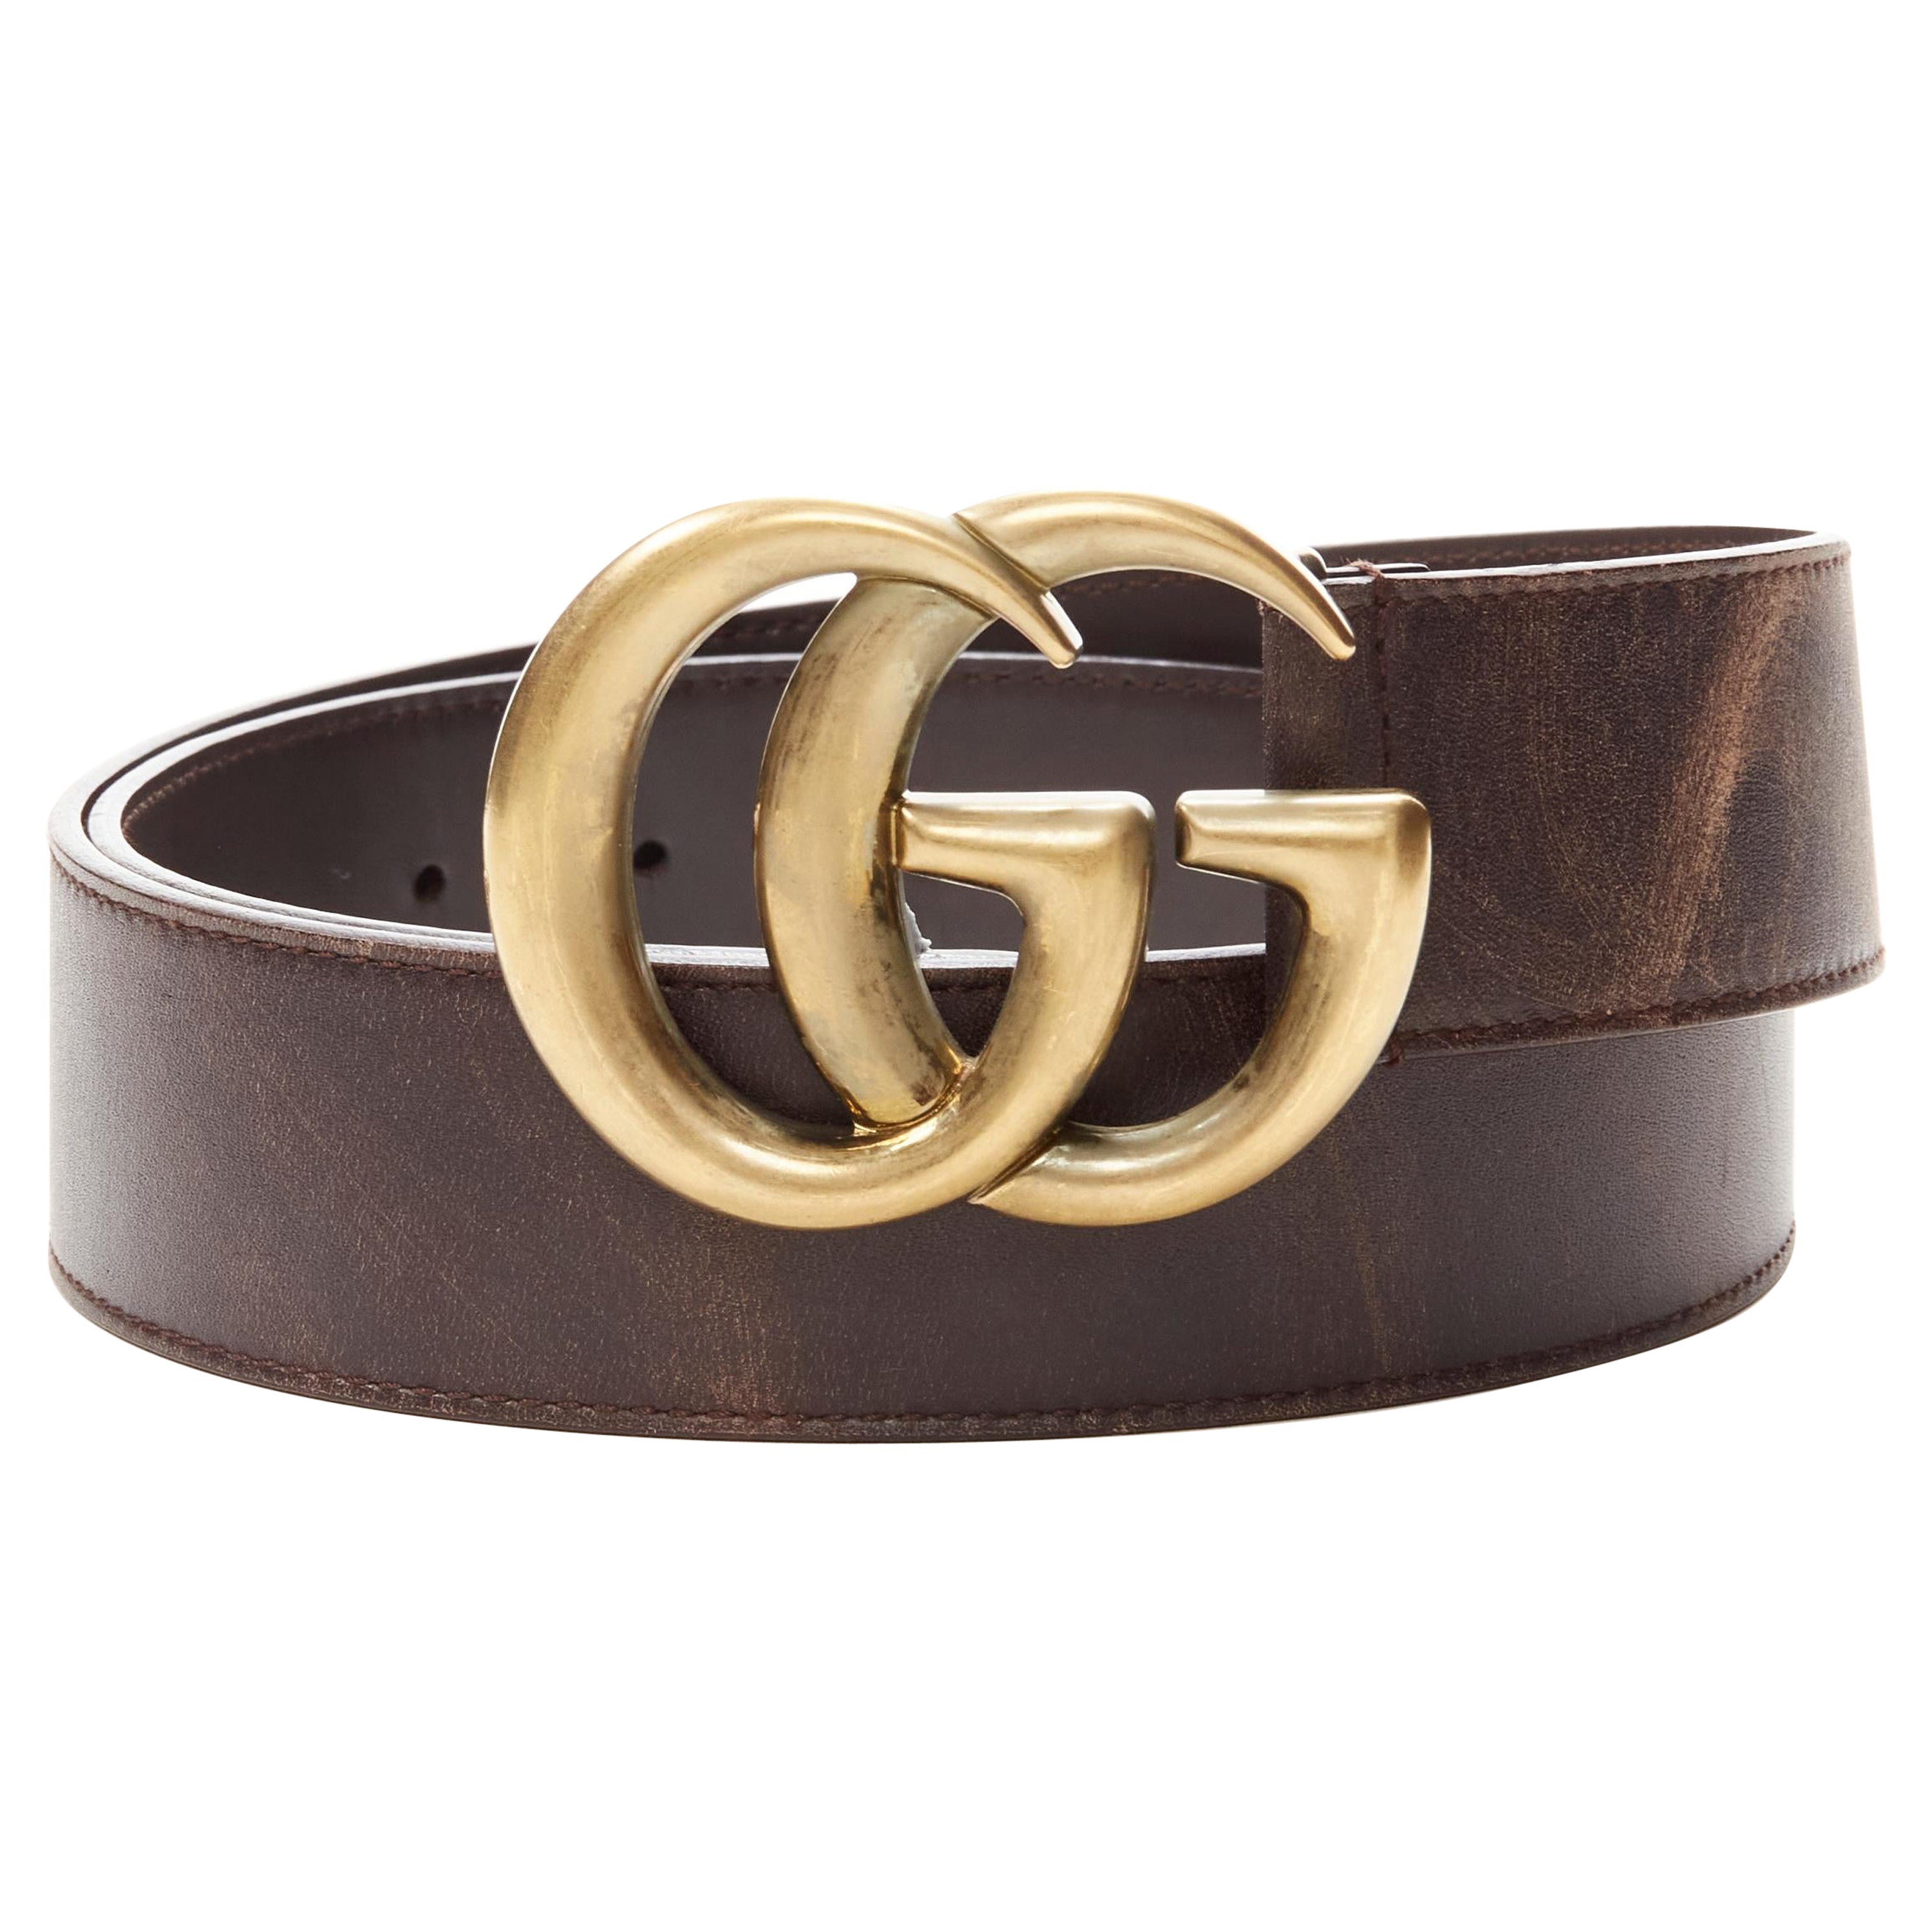 GUCCI Marmont GG buckle Vintage effect brushed brown leather belt 80cm 32"